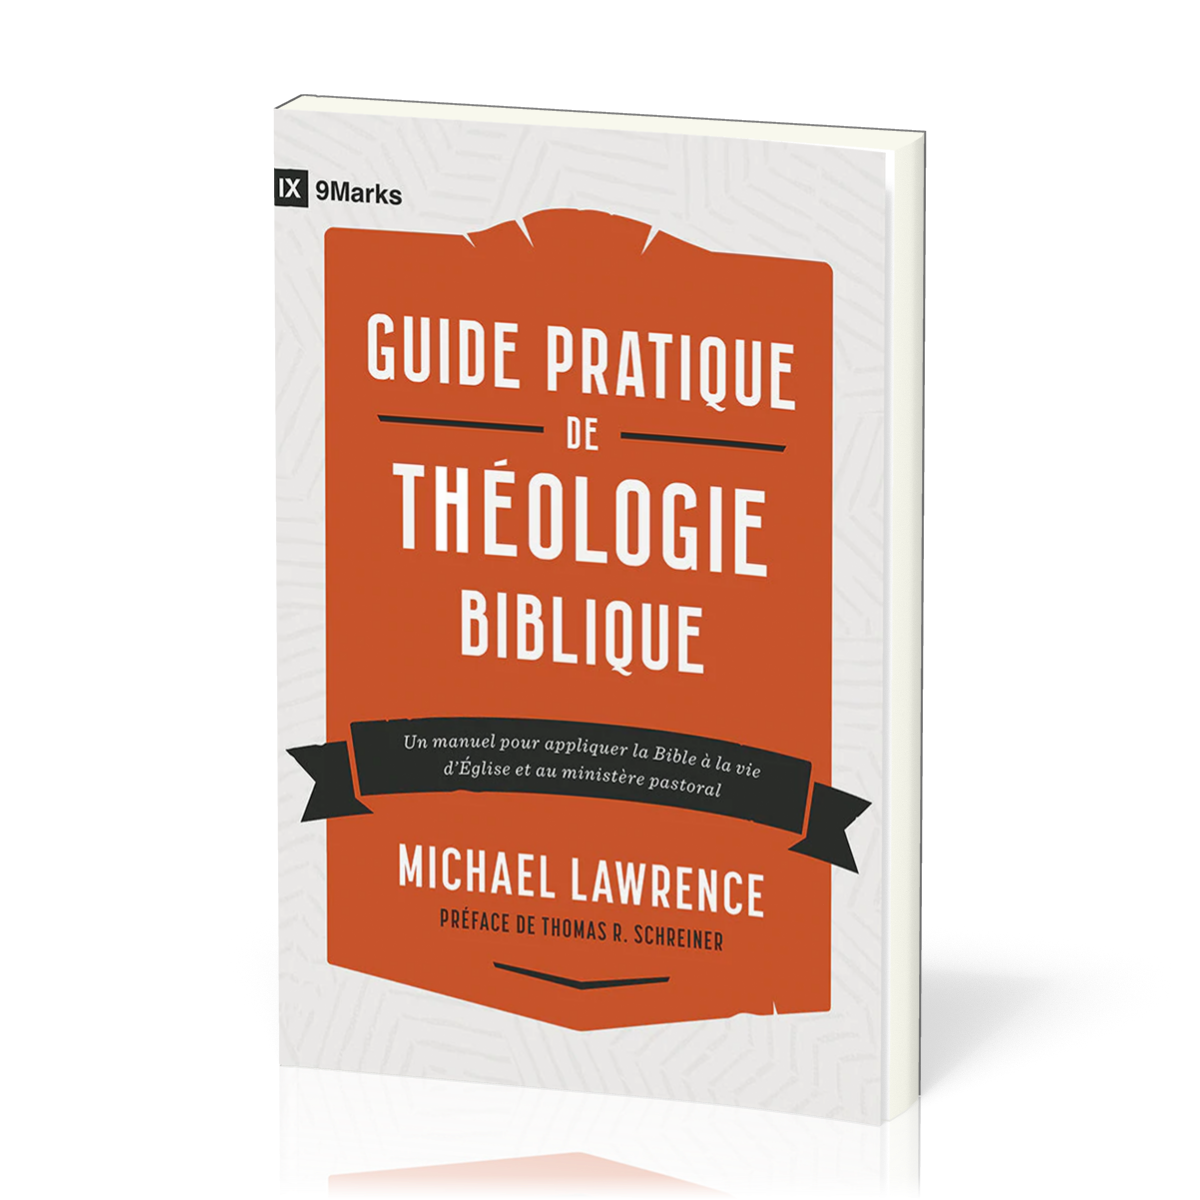 GUIDE PRATIQUE DE THEOLOGIE BIBLIQUE